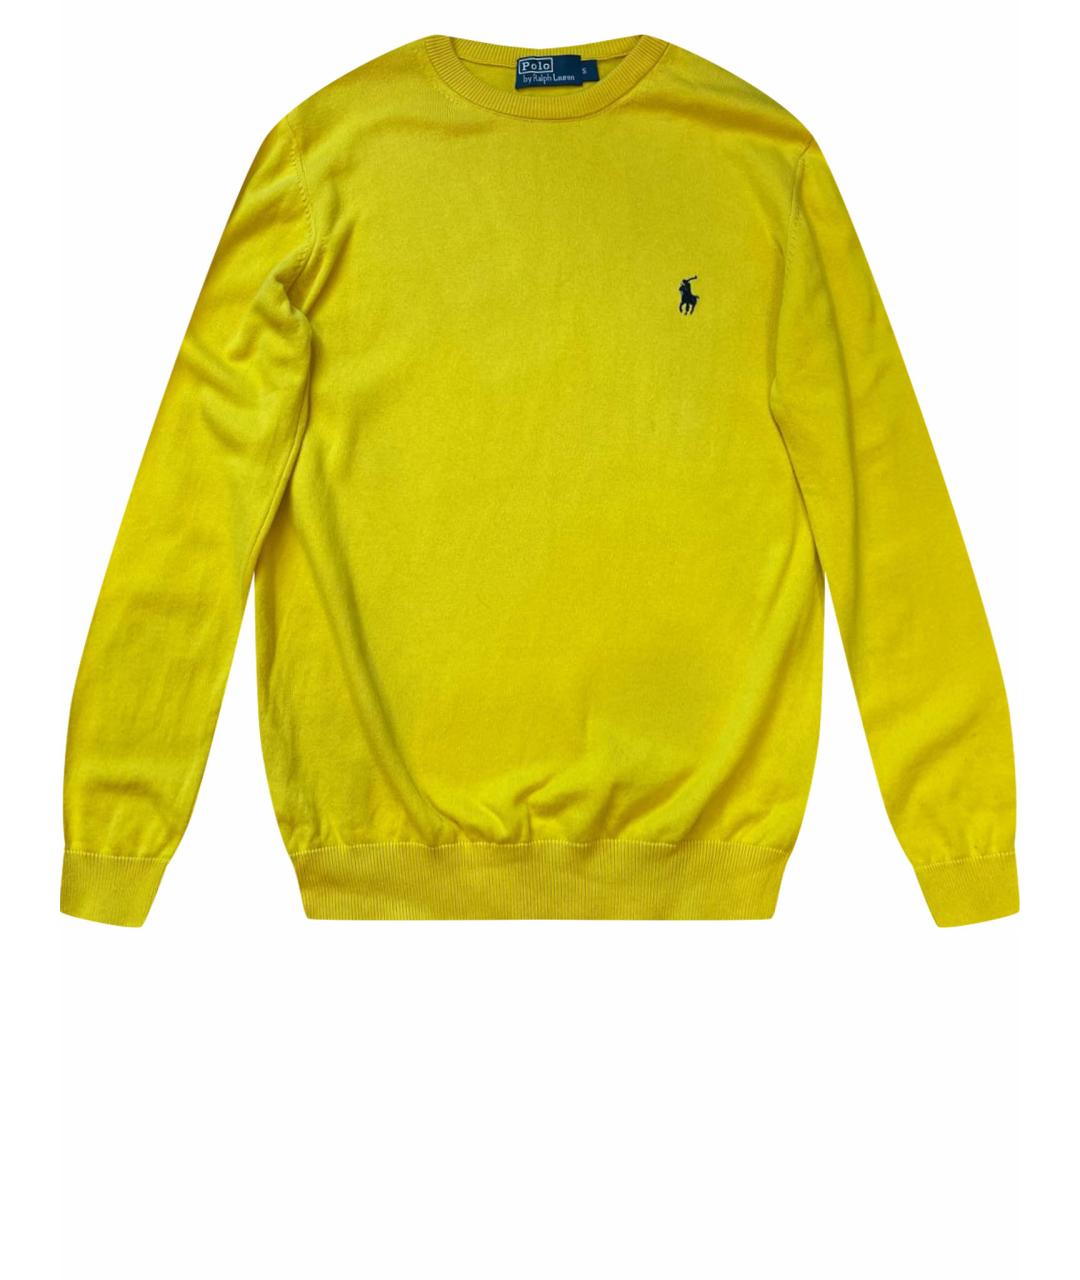 POLO RALPH LAUREN Желтый хлопковый джемпер / свитер, фото 1